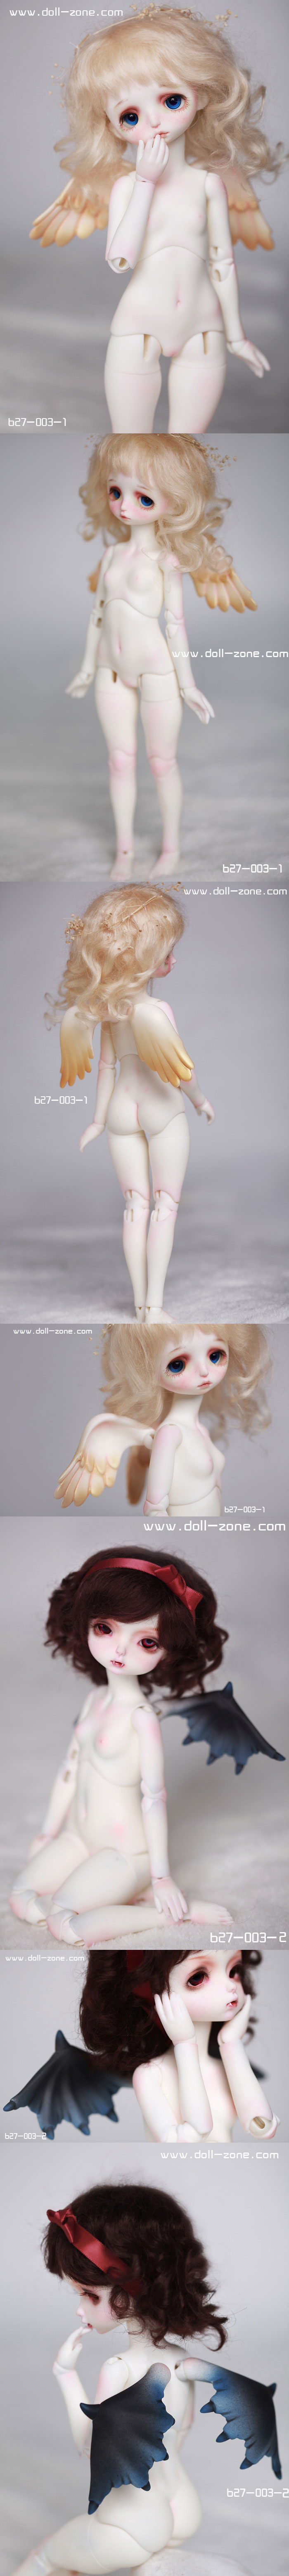 BJD Body B27-003 Girl Boll-jointed doll